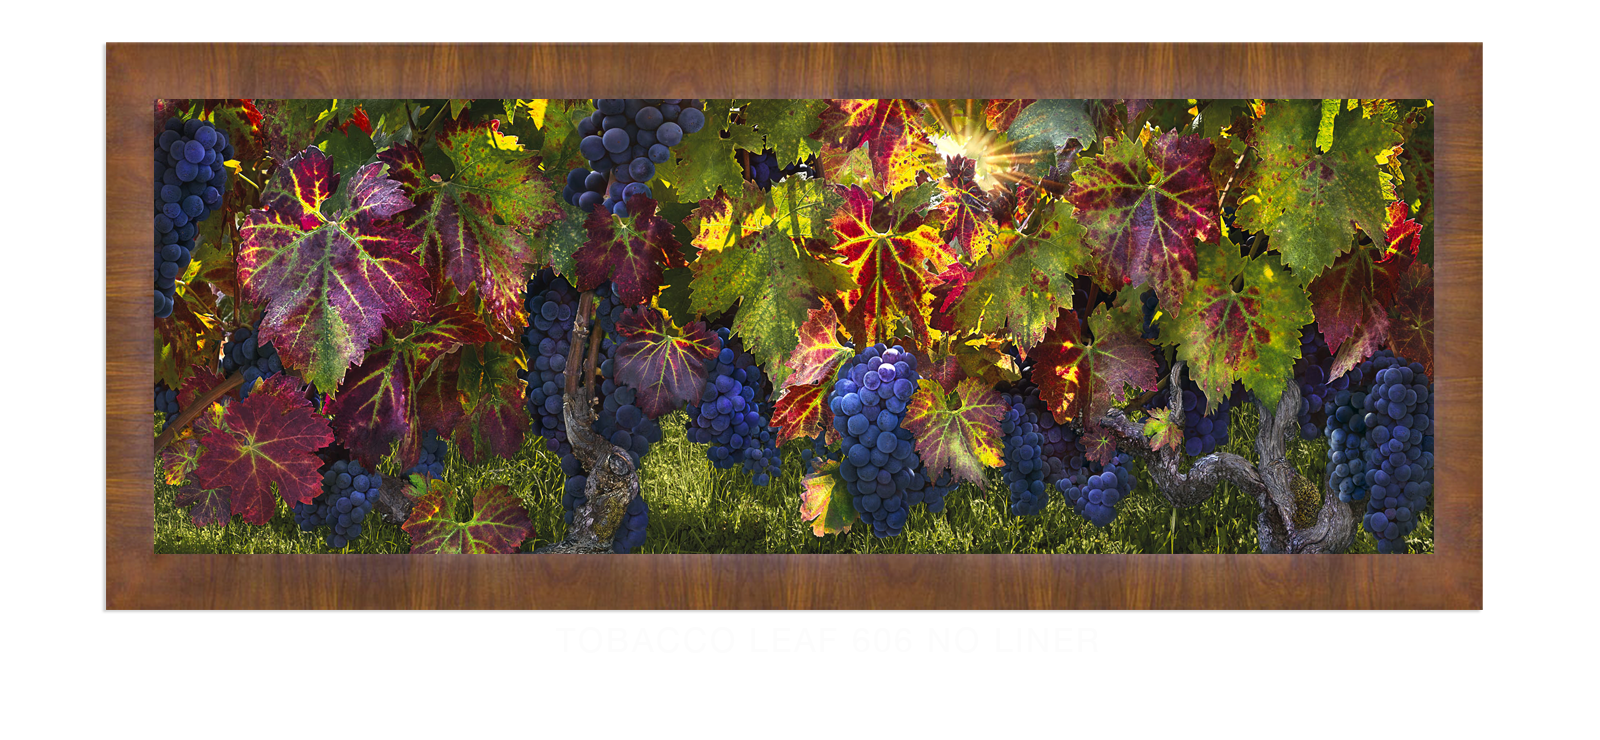 25CATHEDRALI VITIS Tobacco Leaf 606 w_No Liner T